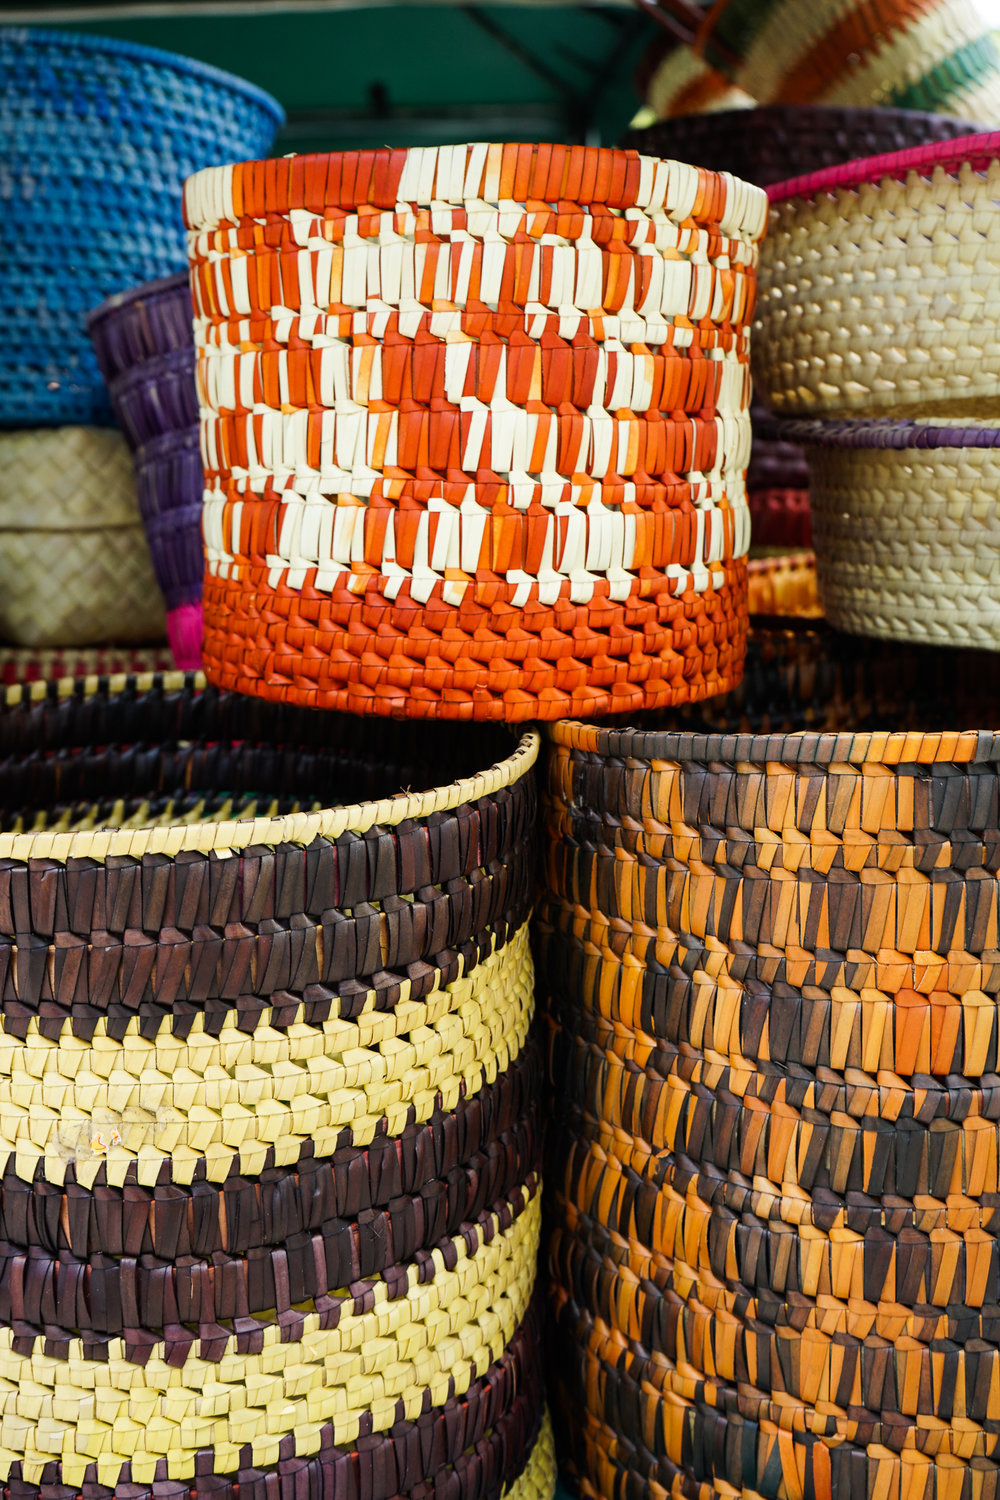  Sri Lankan homewares - palmyrah weaved baskets from Mannar by Natura available at Good Market in the Viharamahadevi Park South East shopping district 